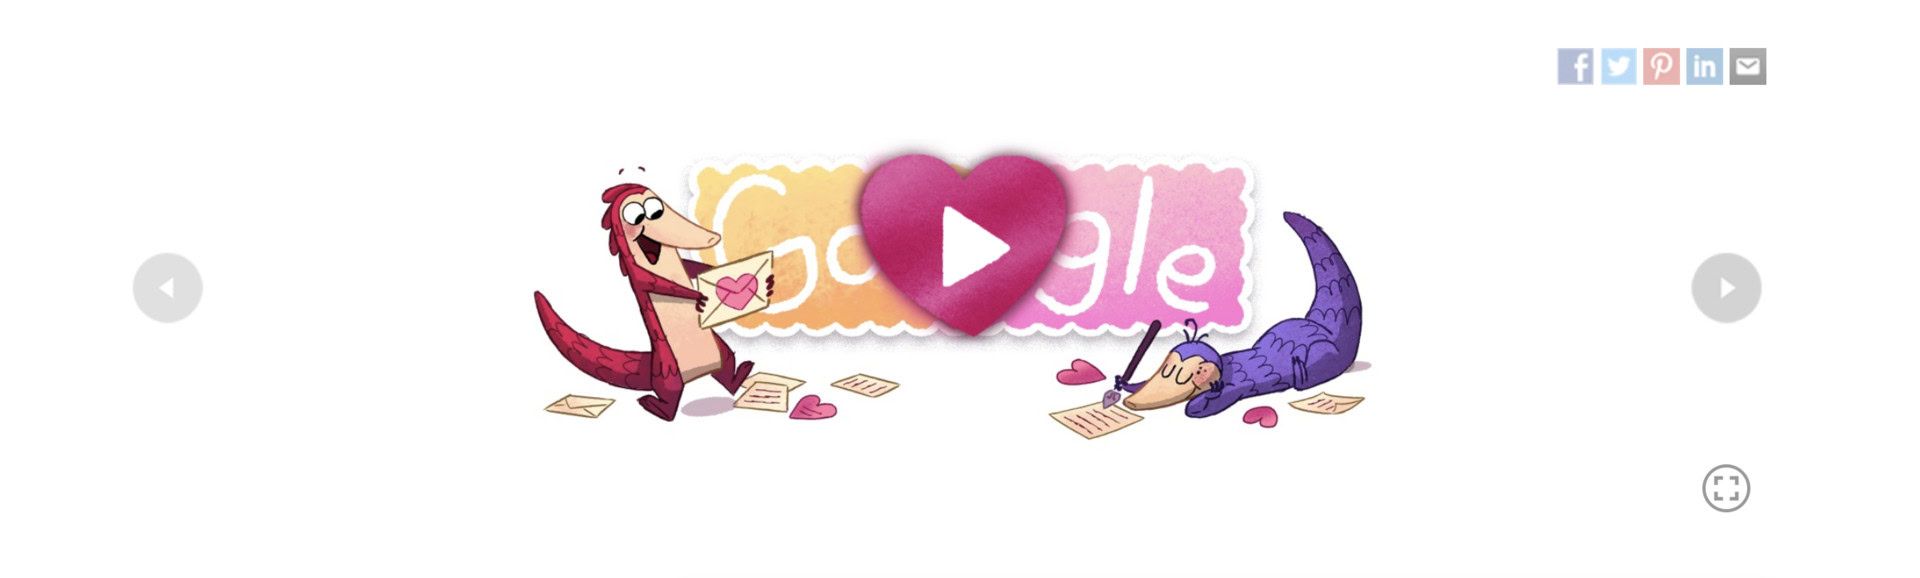 google doodle pengolin love